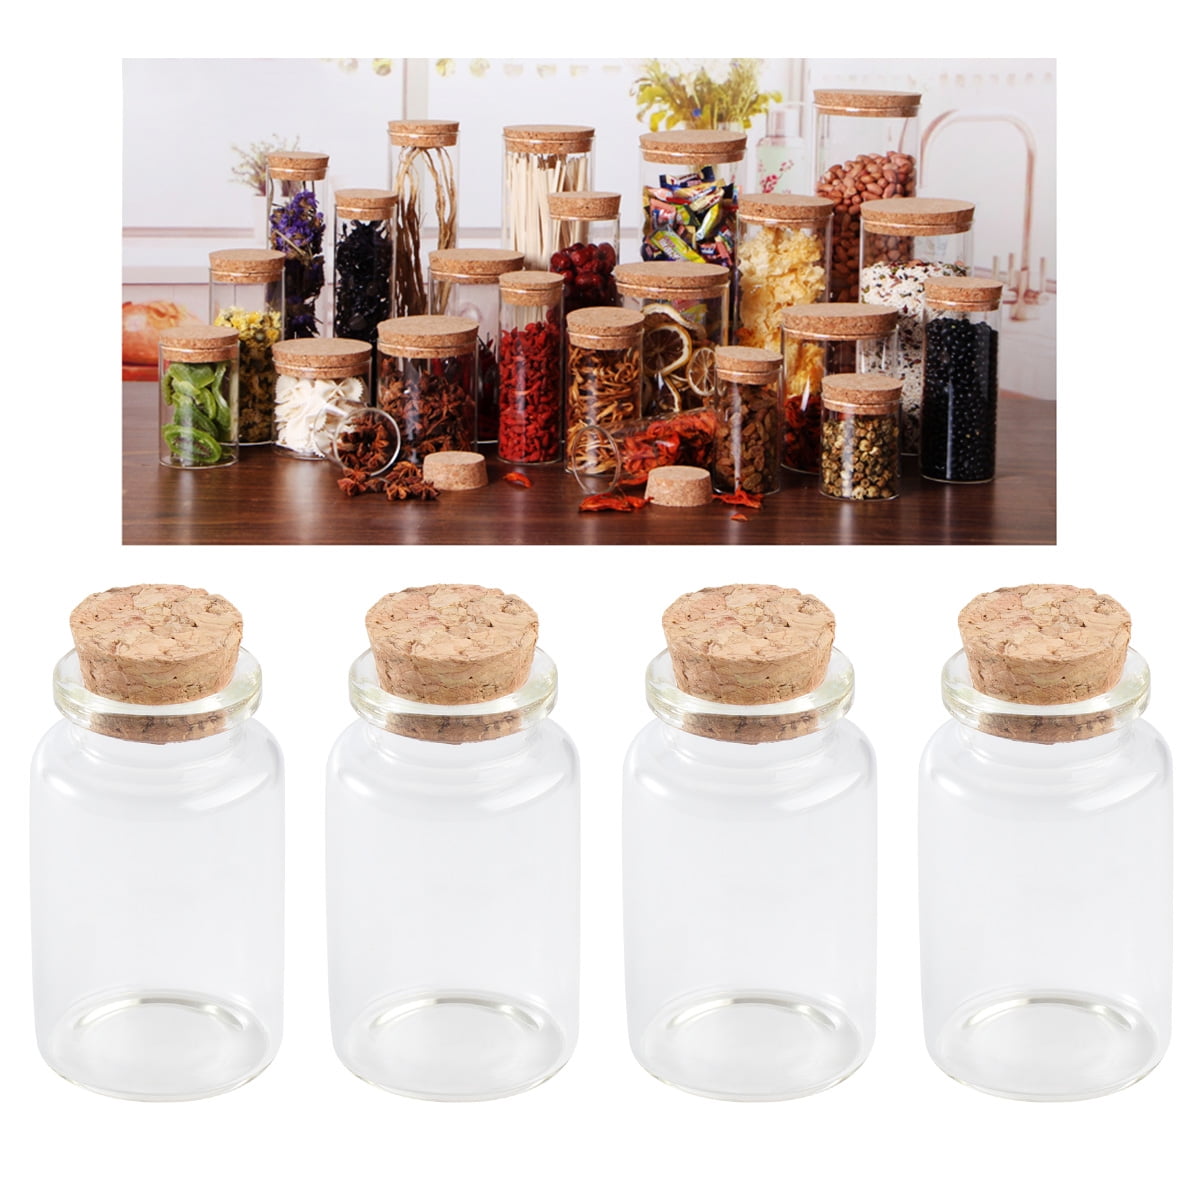 Glass Spice Jar w/ Cork Top - Large – Sullivan Street Tea & Spice